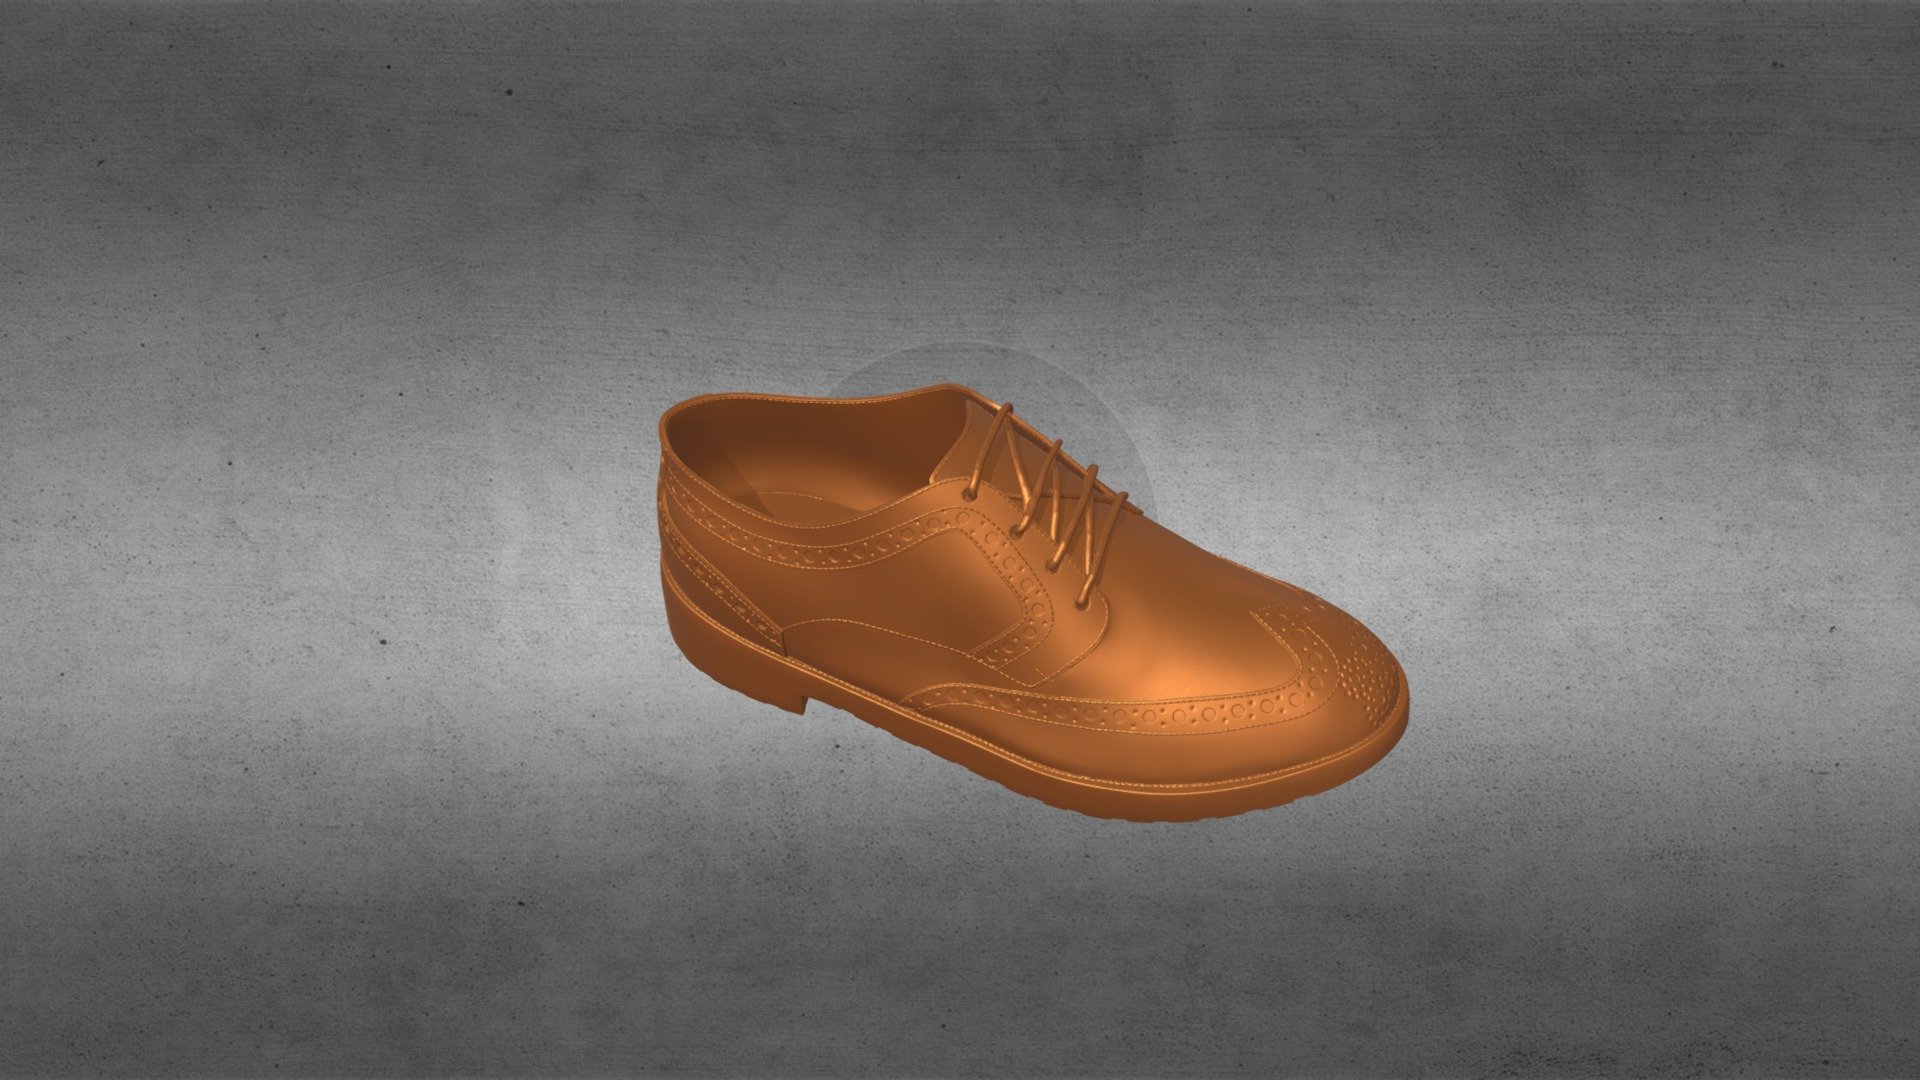 3D Printable Shoe